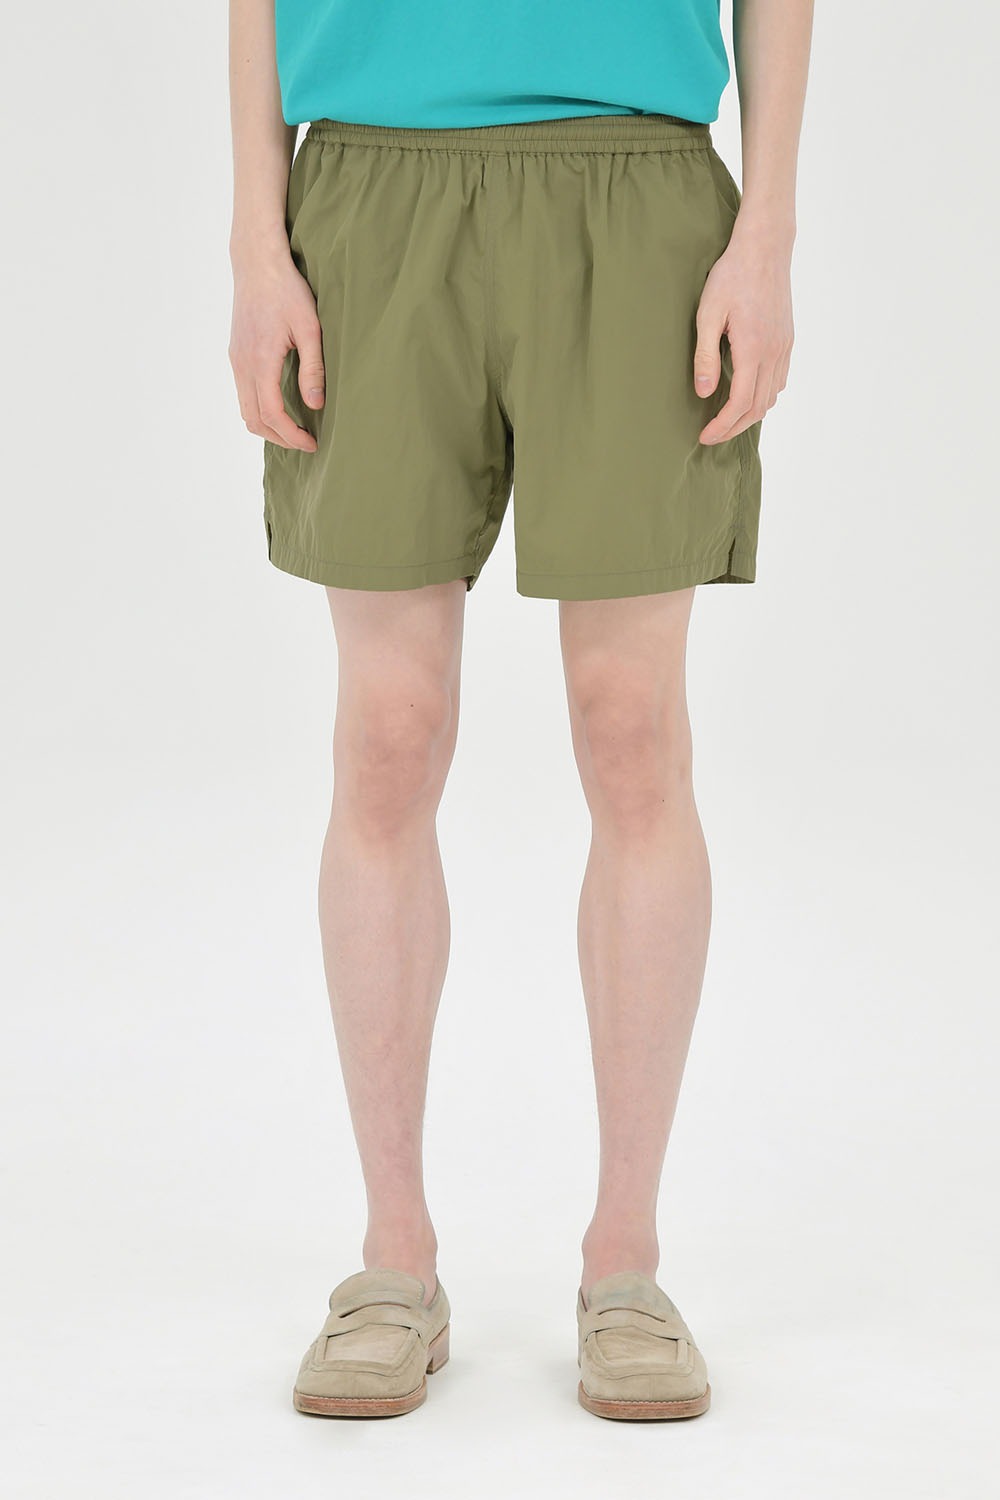 Nylon Shorts-Olive